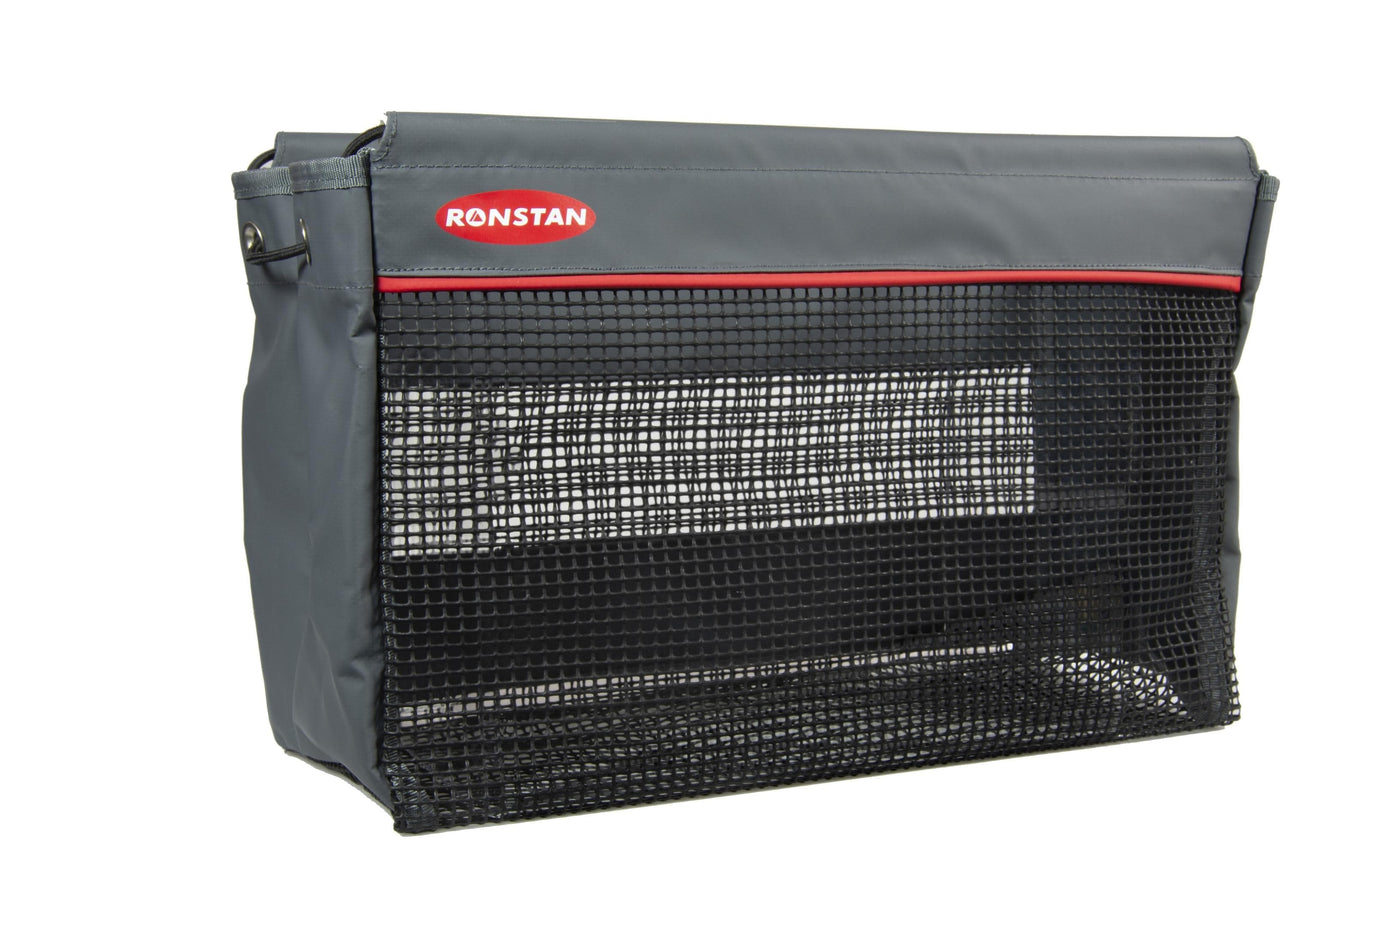 Ronstan Ronstan Rope Bag - Medium - 15.75" x 9.875" x 7.875" Sailing